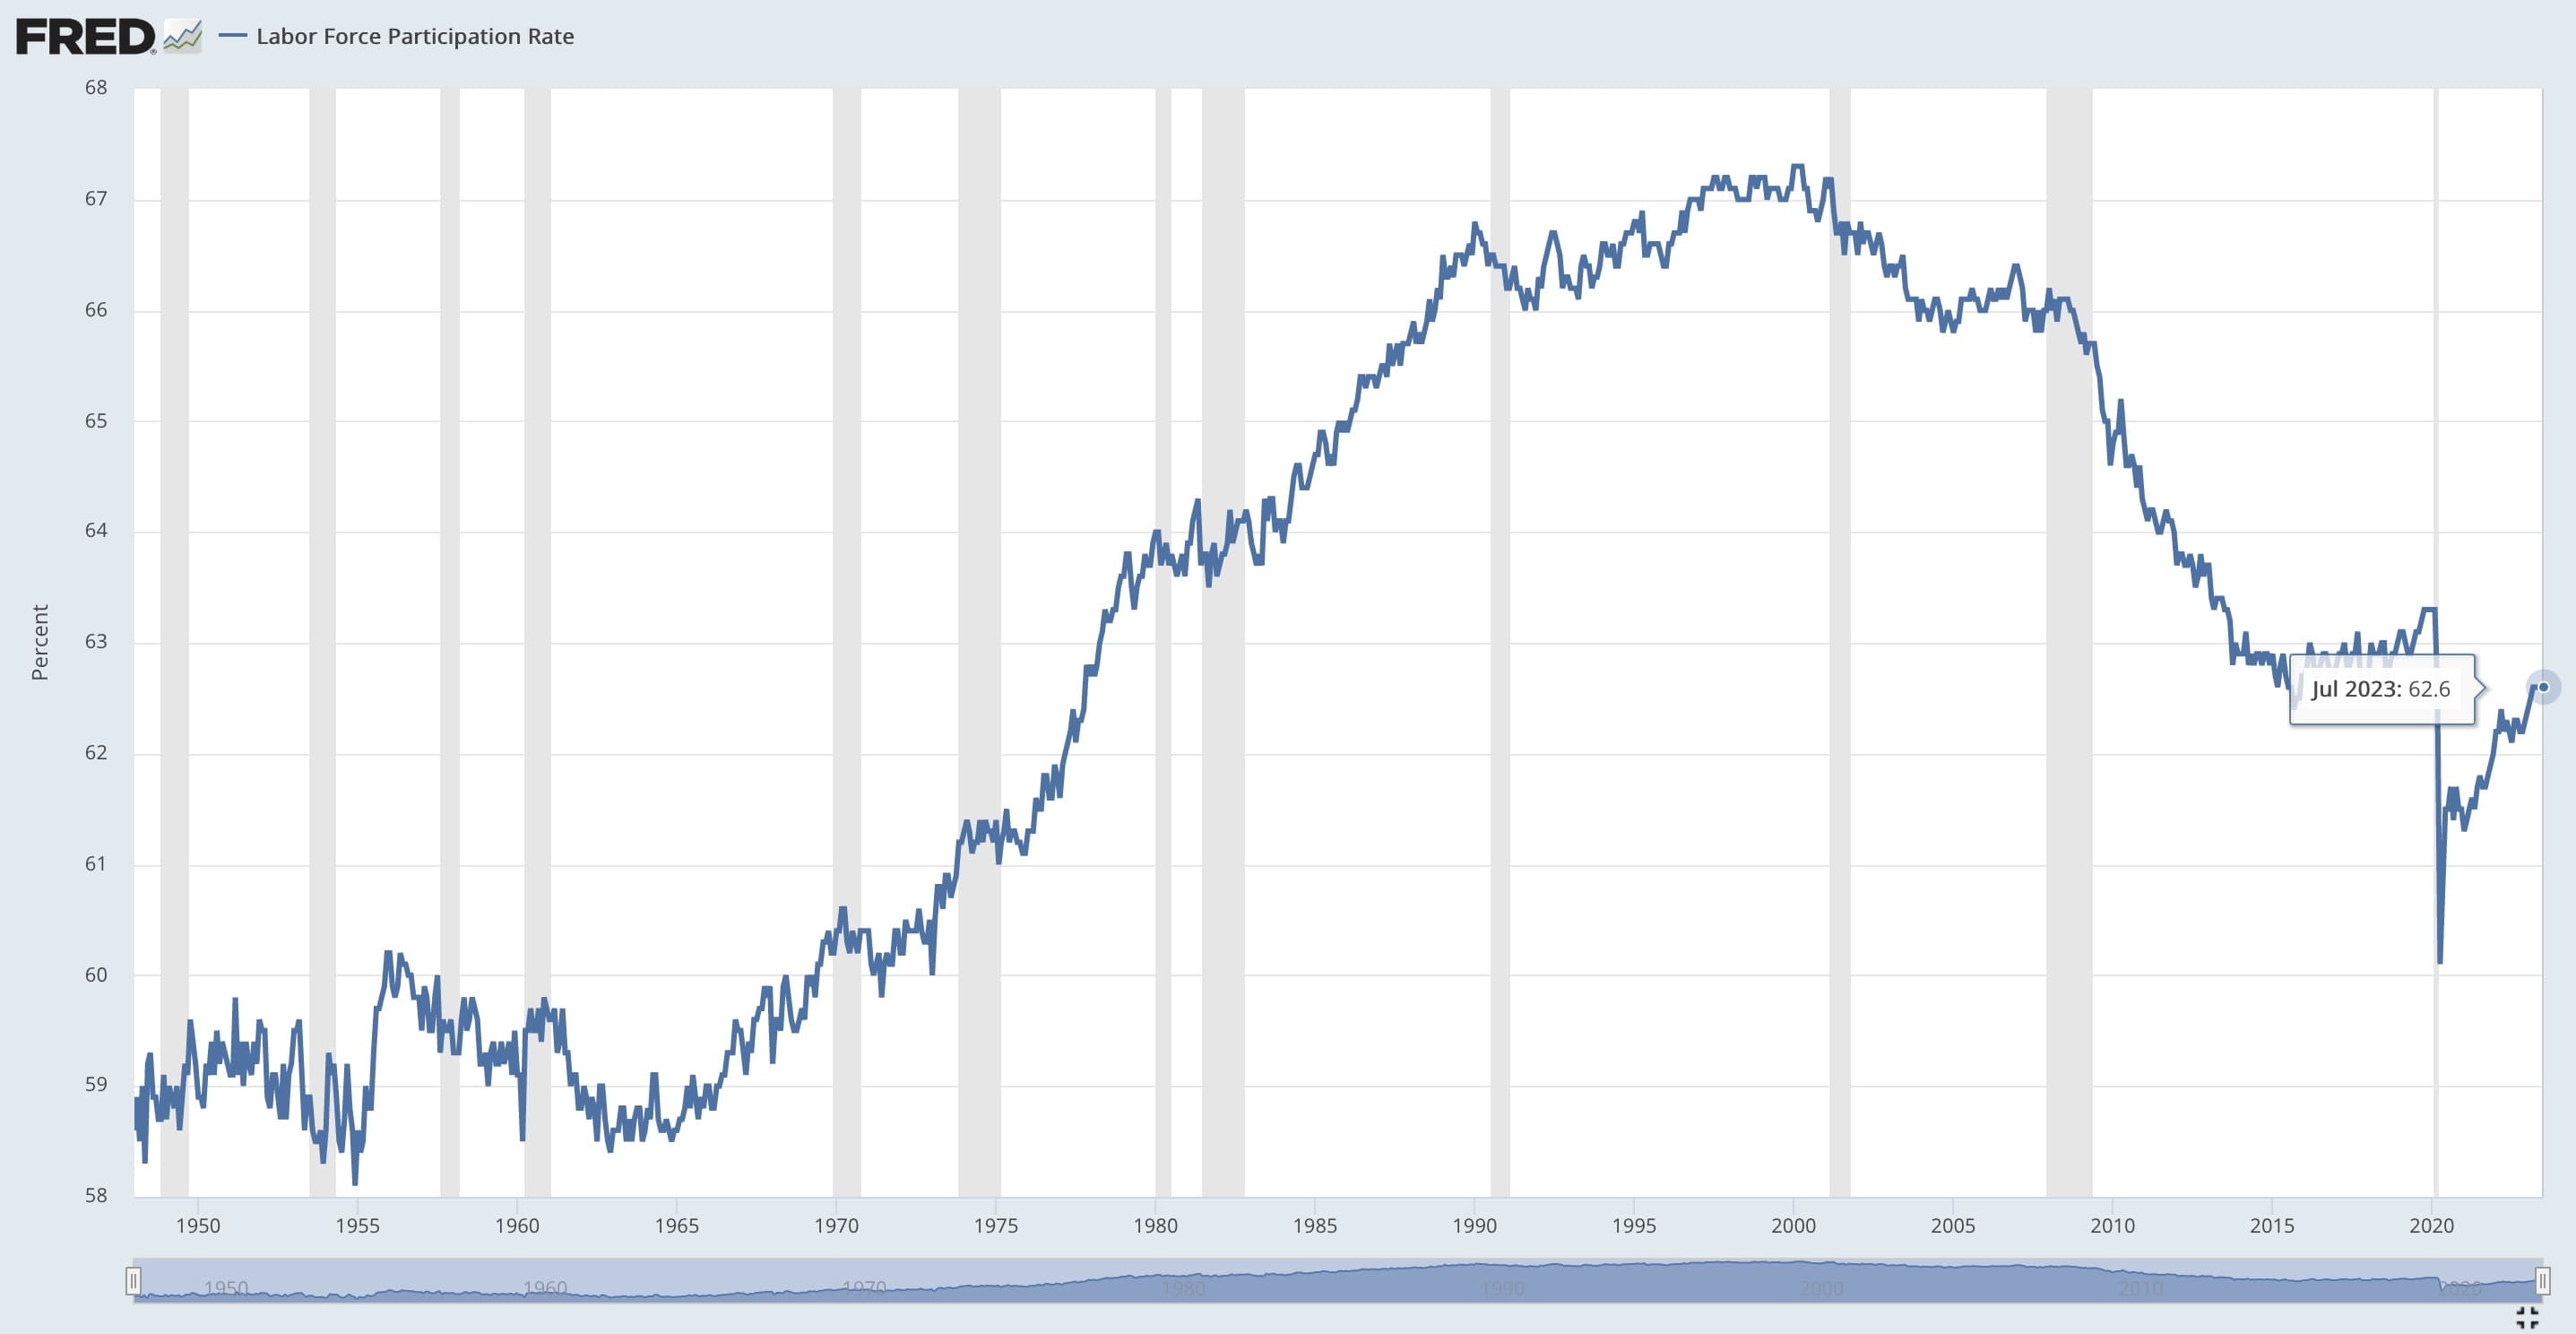 U.S. labor force participation rate, U.S. Bureau of Labor Statistics